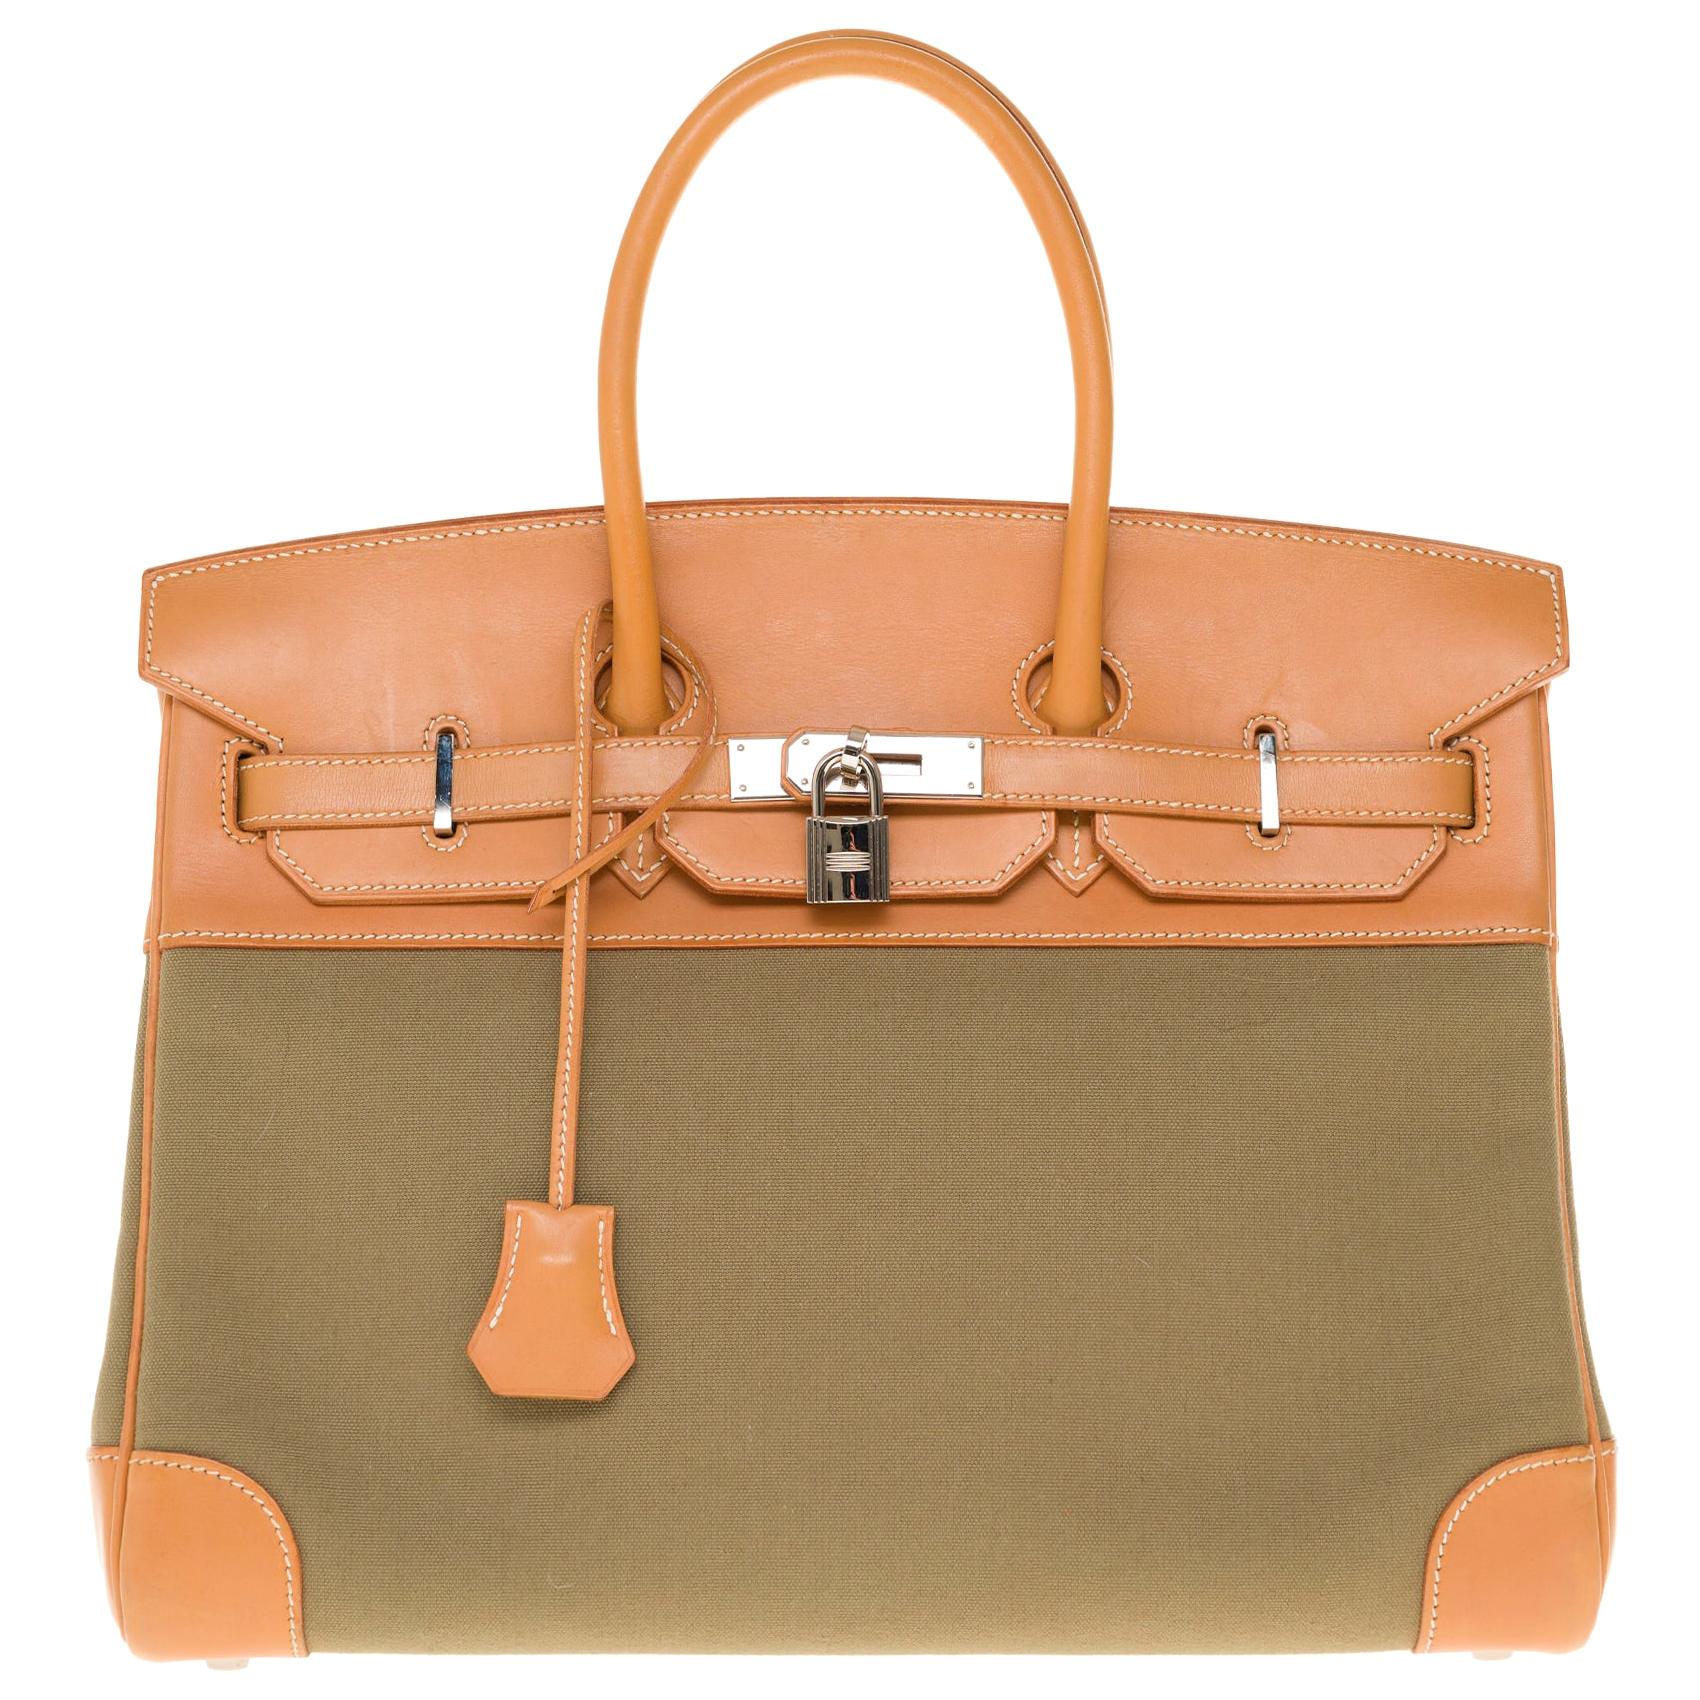 Rare Hermès Birkin 35 bi-material handbag in  khaki canvas and natural leather